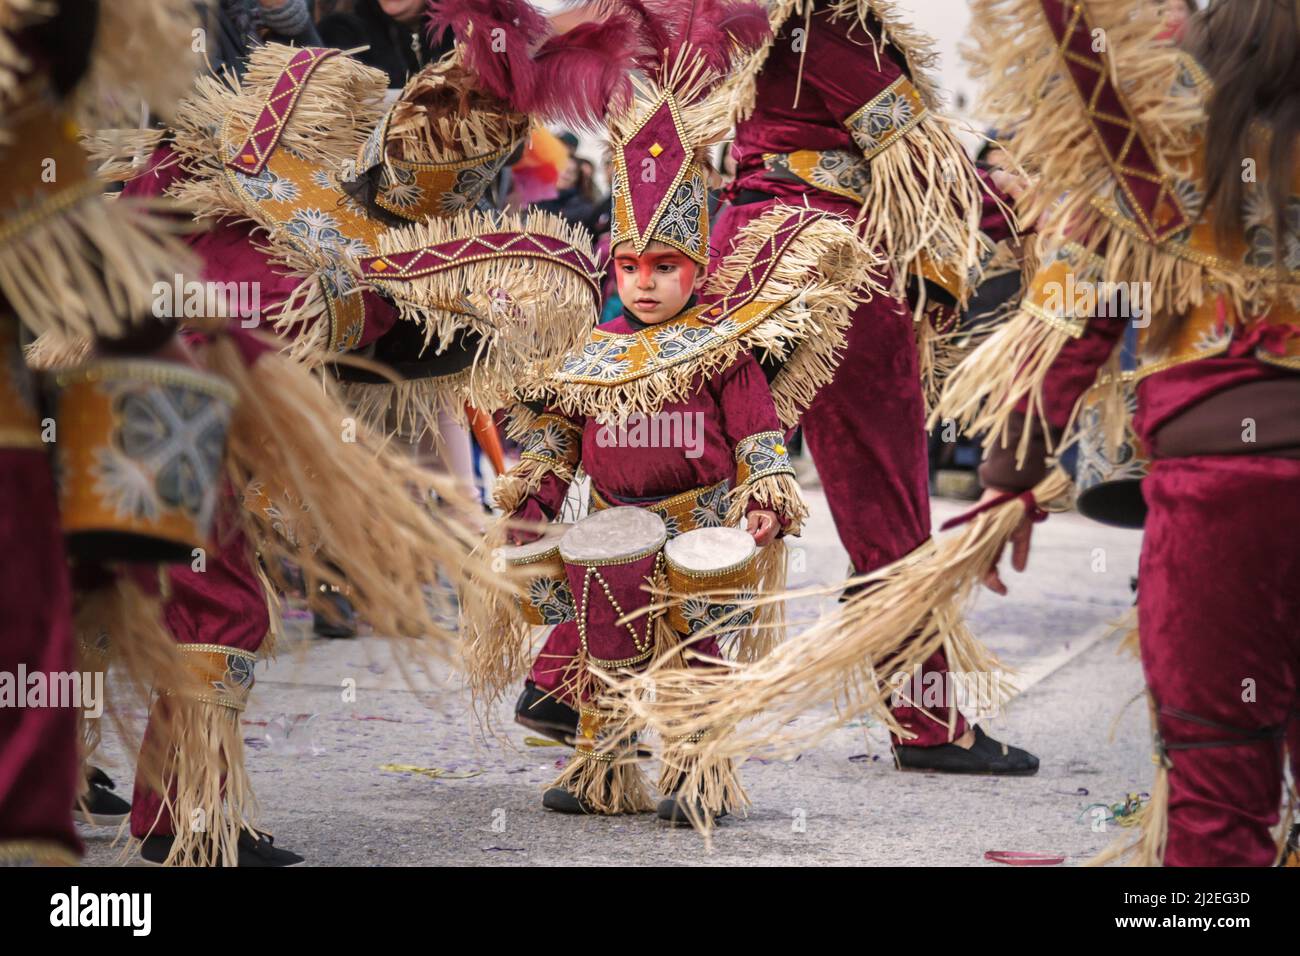 Portugal Karneval - Junge mit afrikanischen Trommeln - Bate no Tambor - Samba Pra Sauda Afrika - Samba Schule Batuca - Mealhada Carnaval Parade Stockfoto